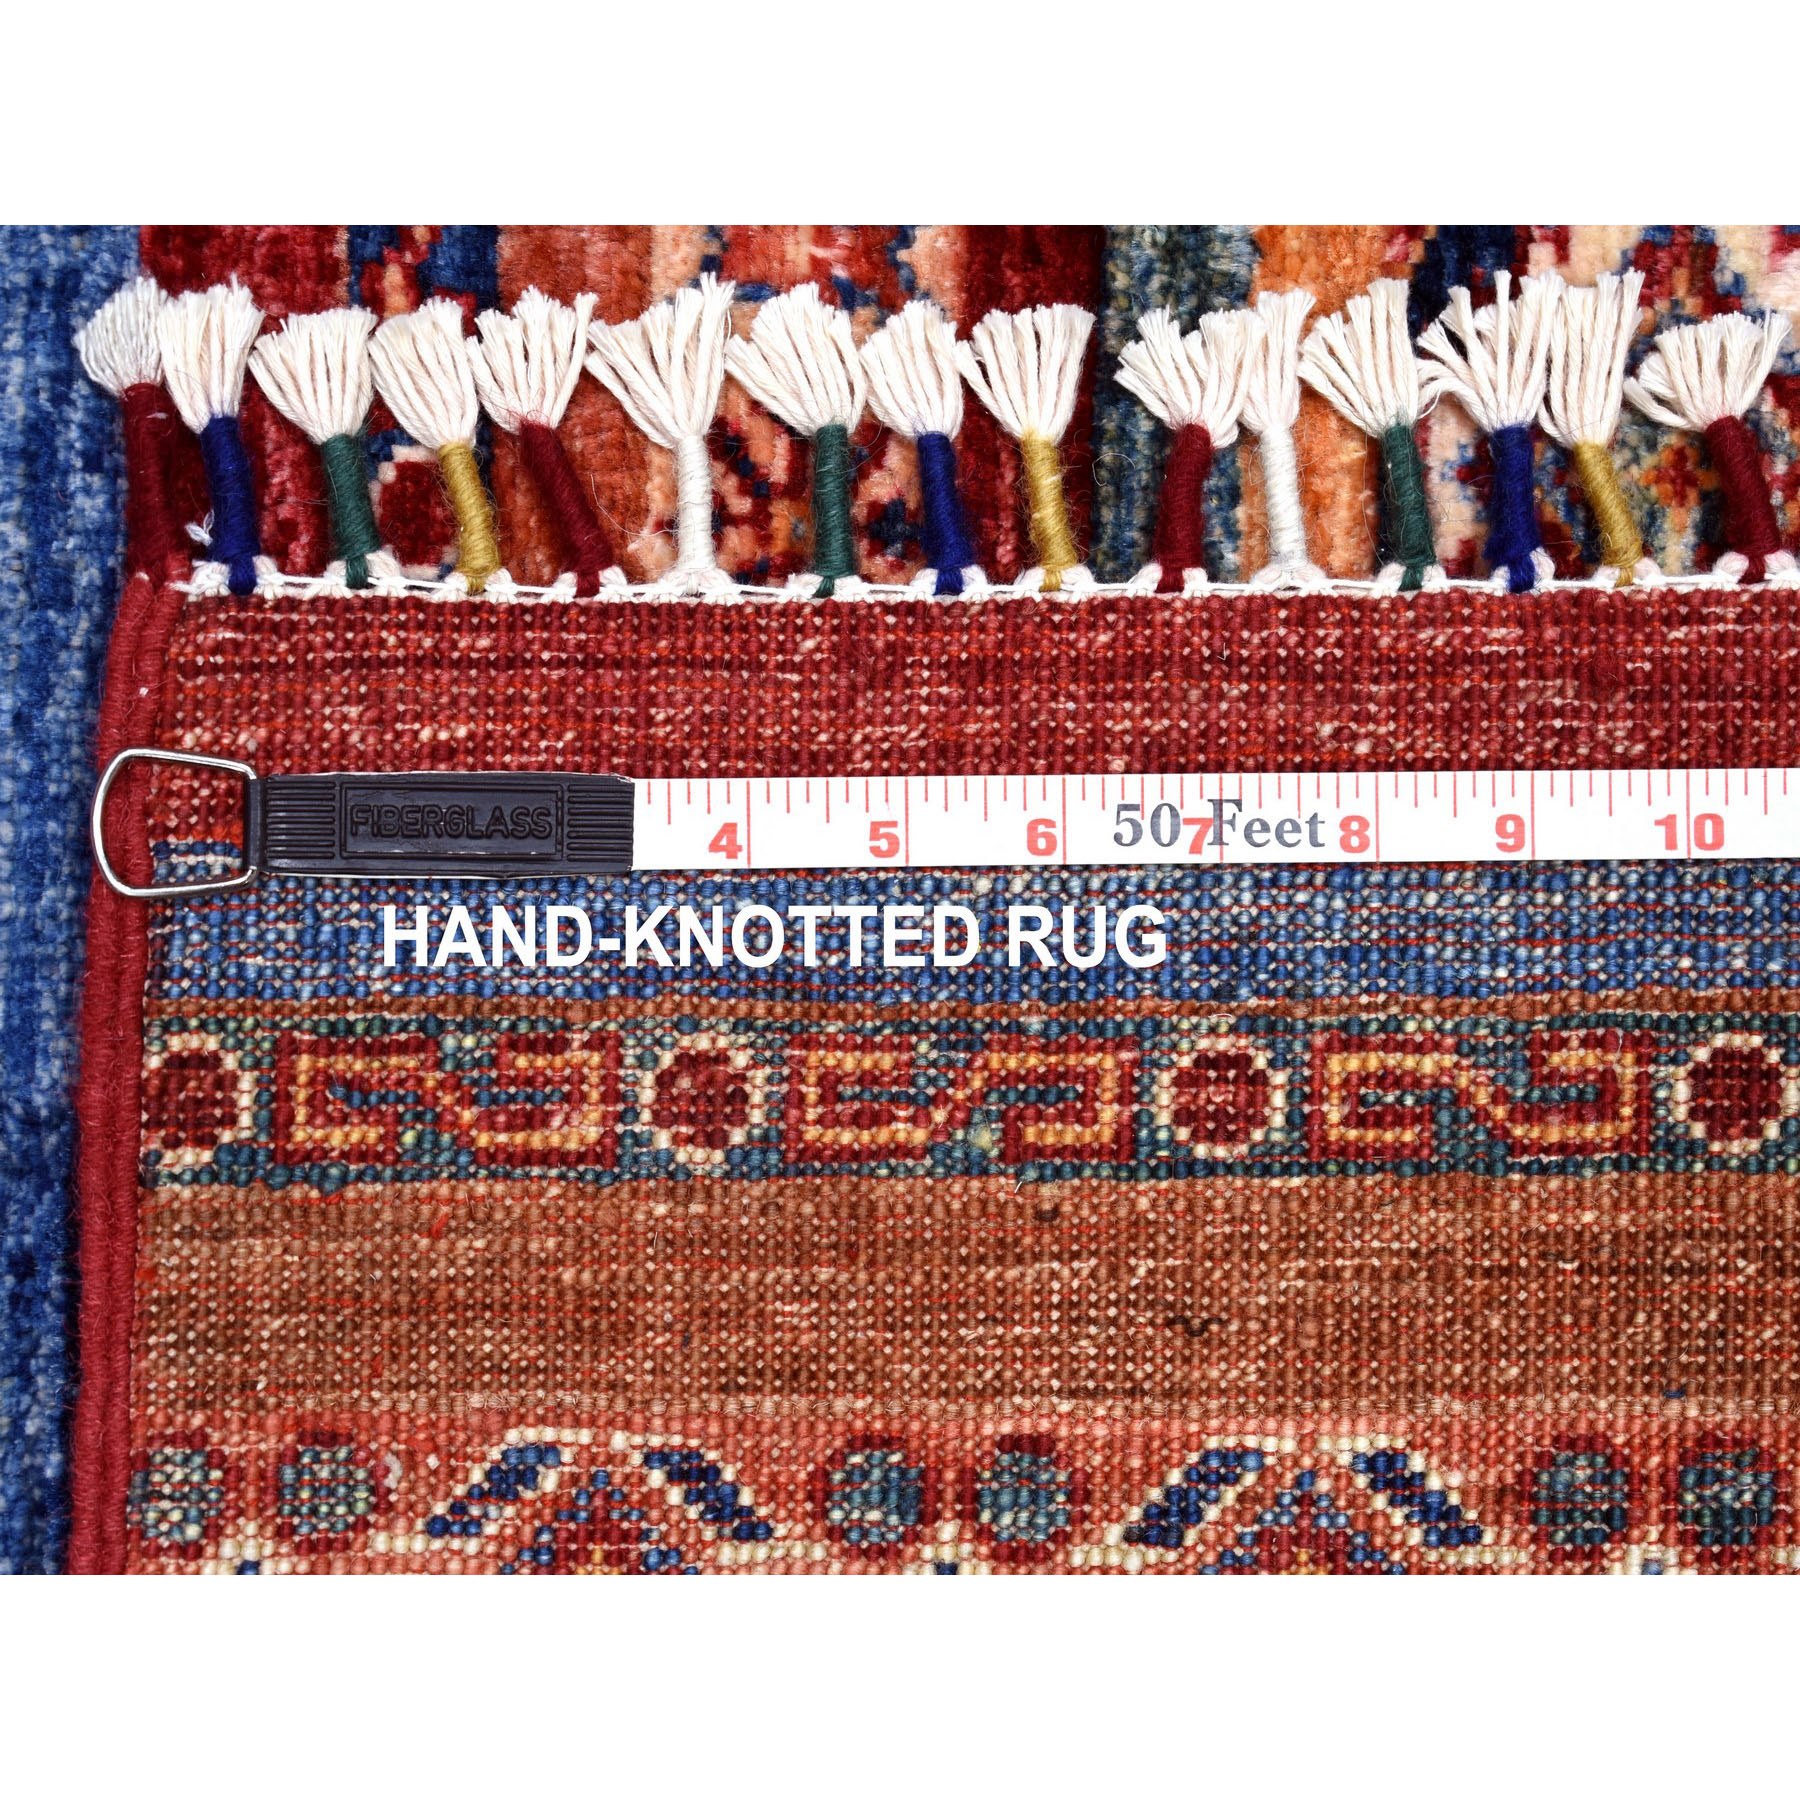 2-10 x8-3  Red Khorjin Design Runner Super Kazak Tribal Hand Knotted Pure Wool Oriental Rug 